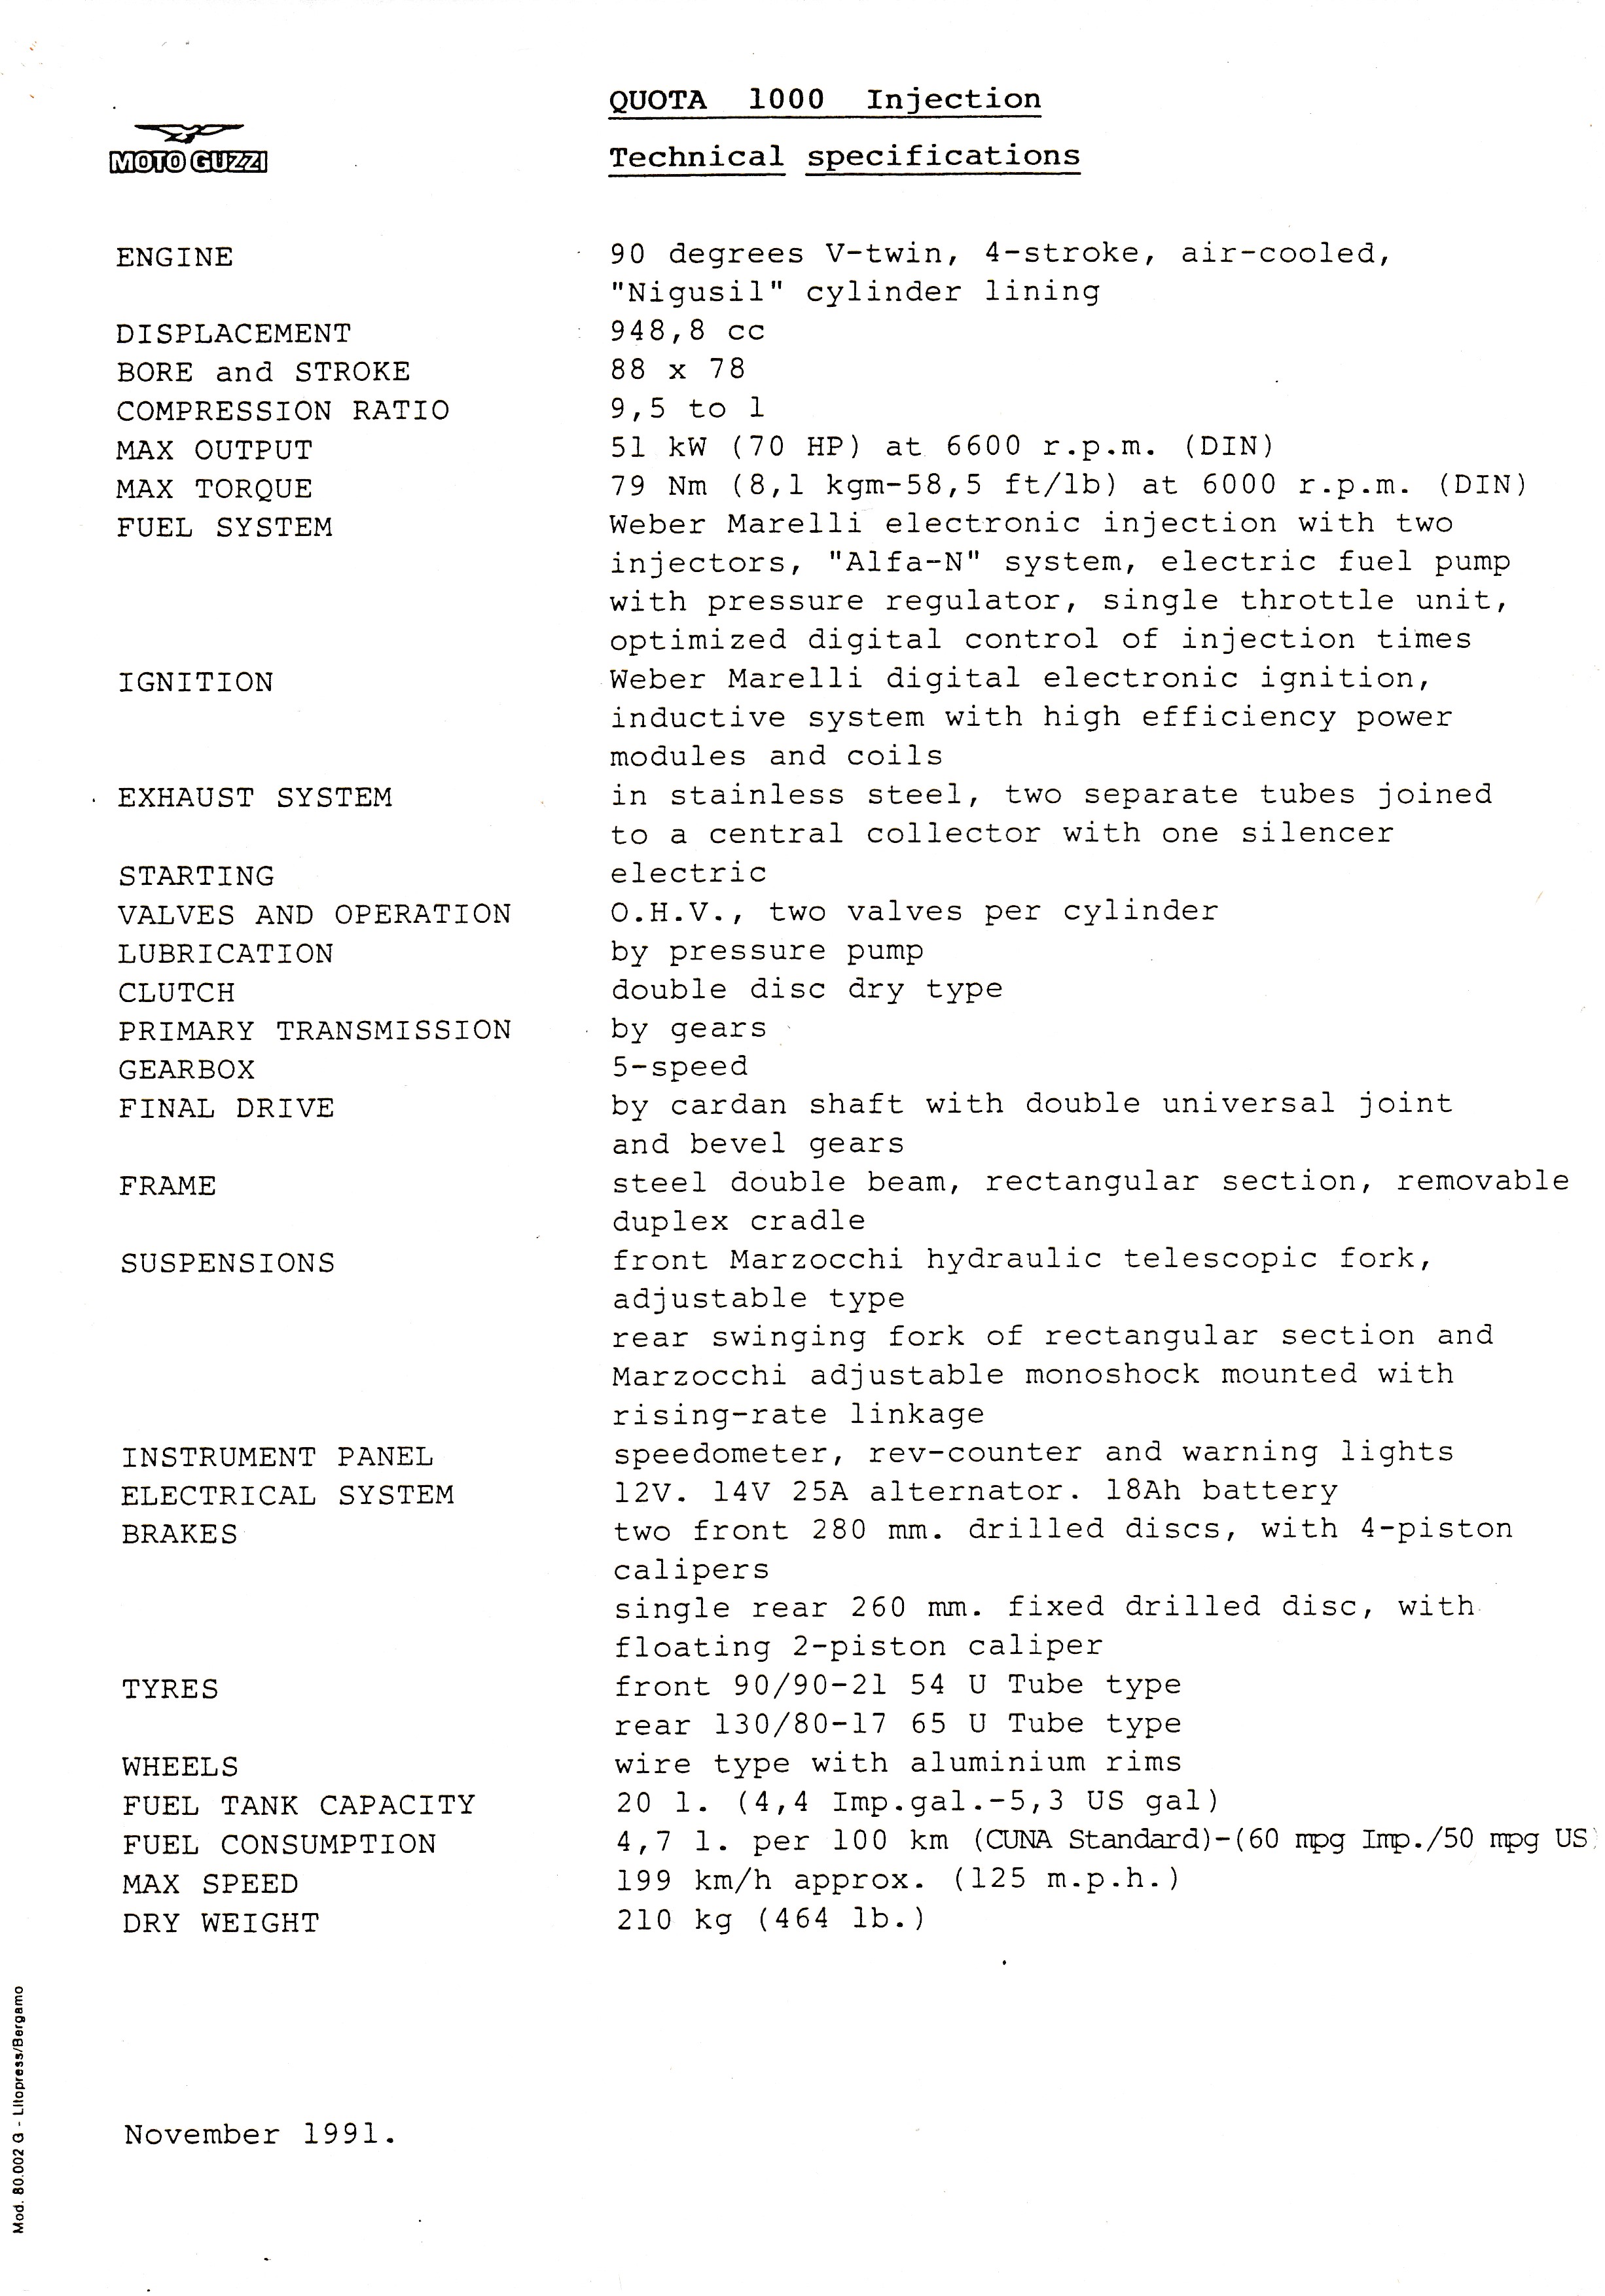 Press release - Moto Guzzi Quota 1000 technical specifications (1991 November)